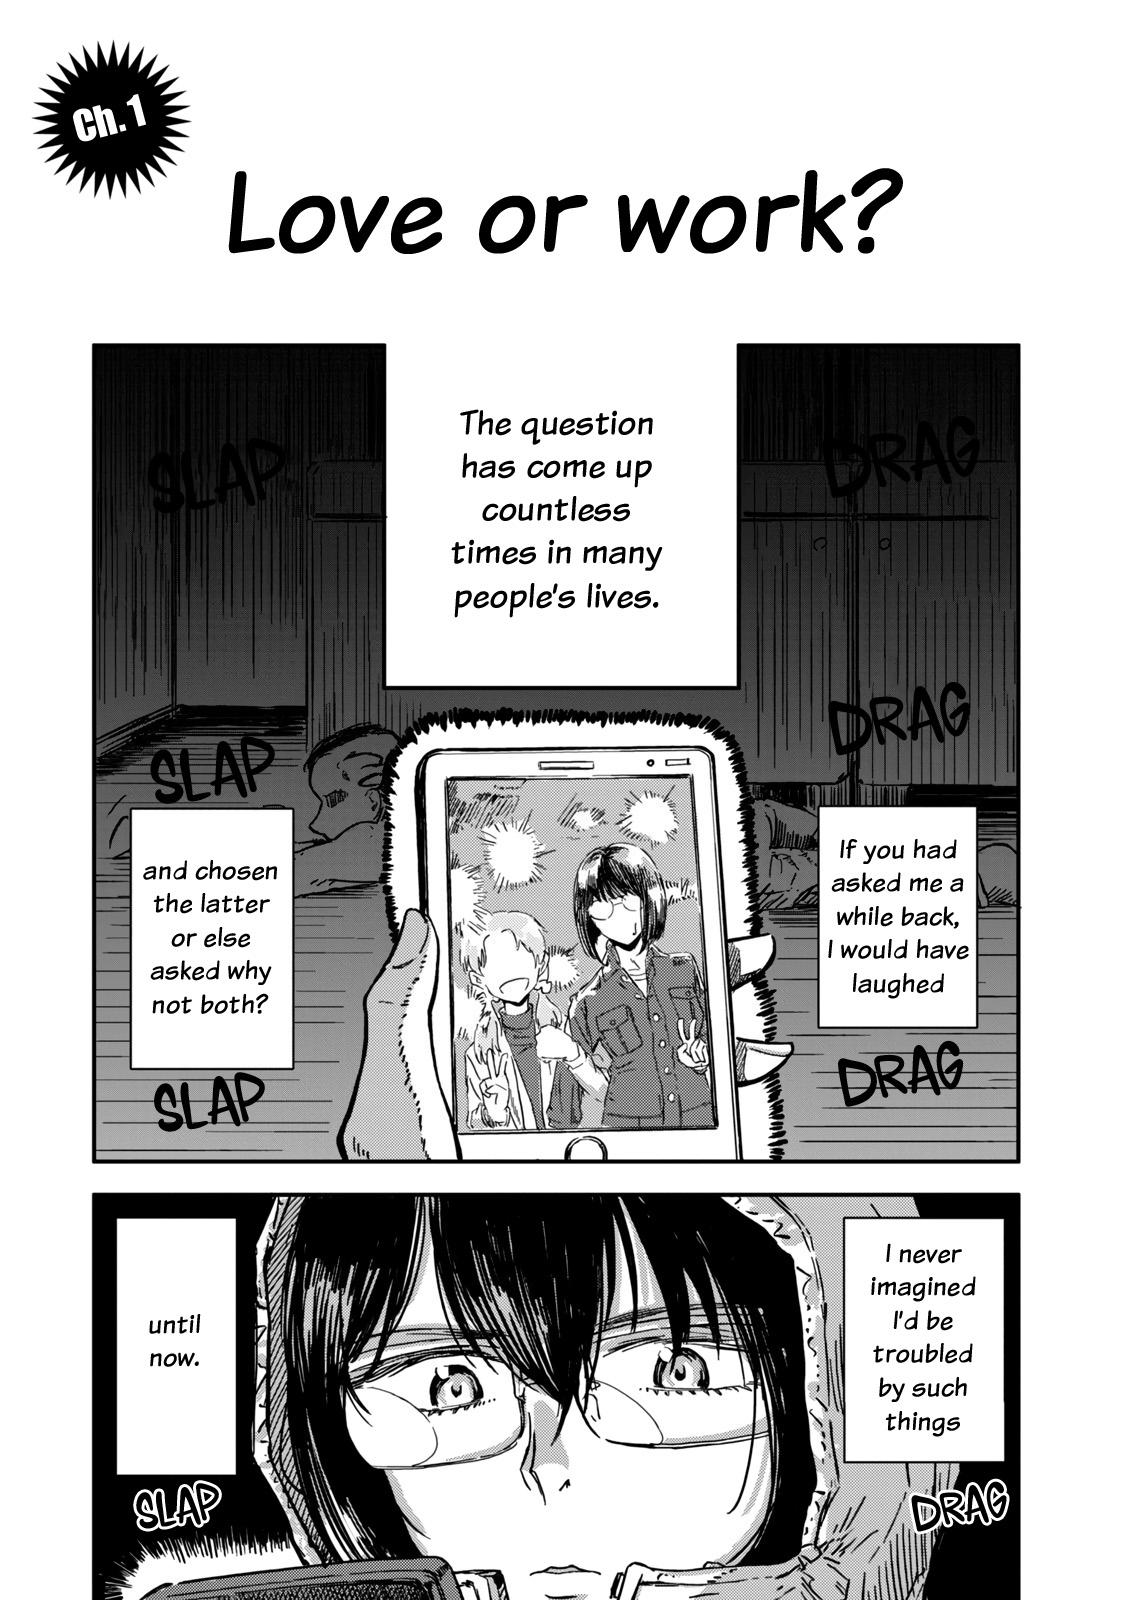 Read Koroshiya Yametai Manga on Mangakakalot